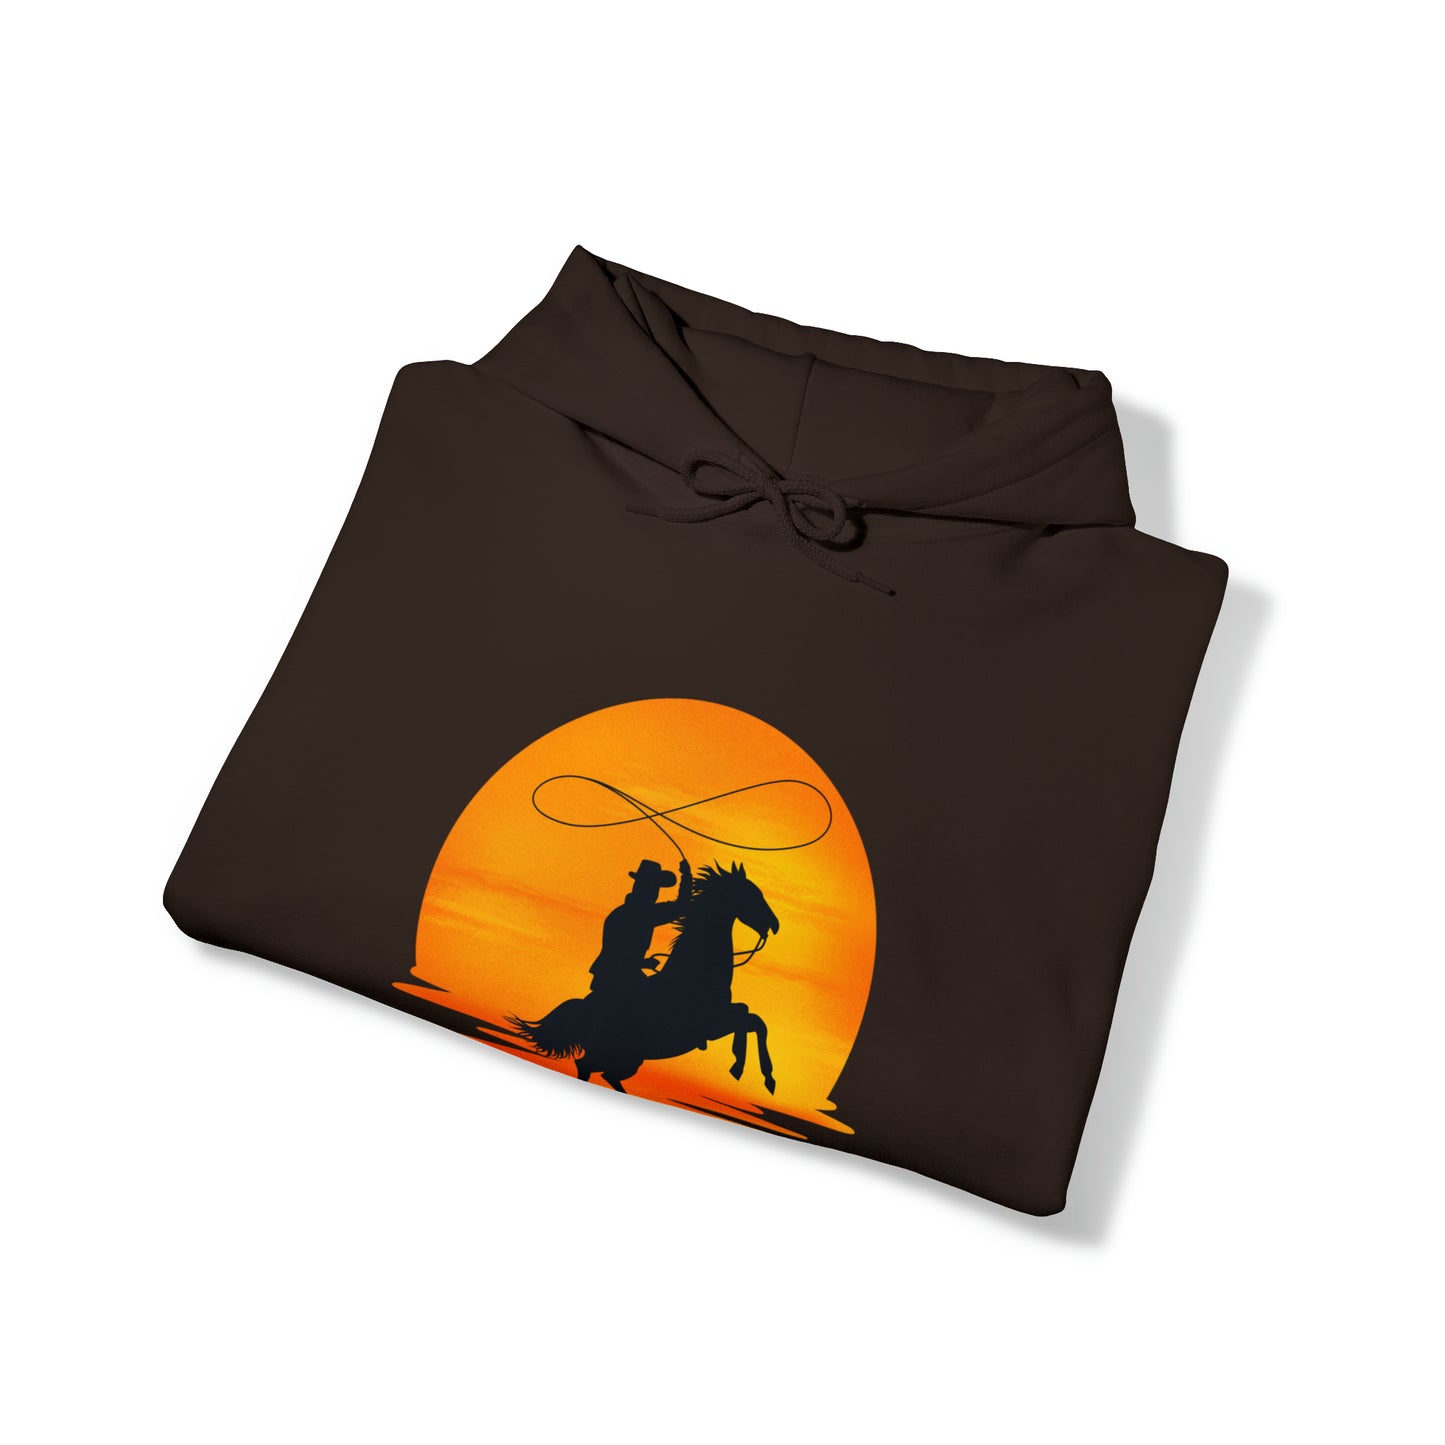 Cowboy sunset - Unisex Heavy Blend™ Hooded Sweatshirt